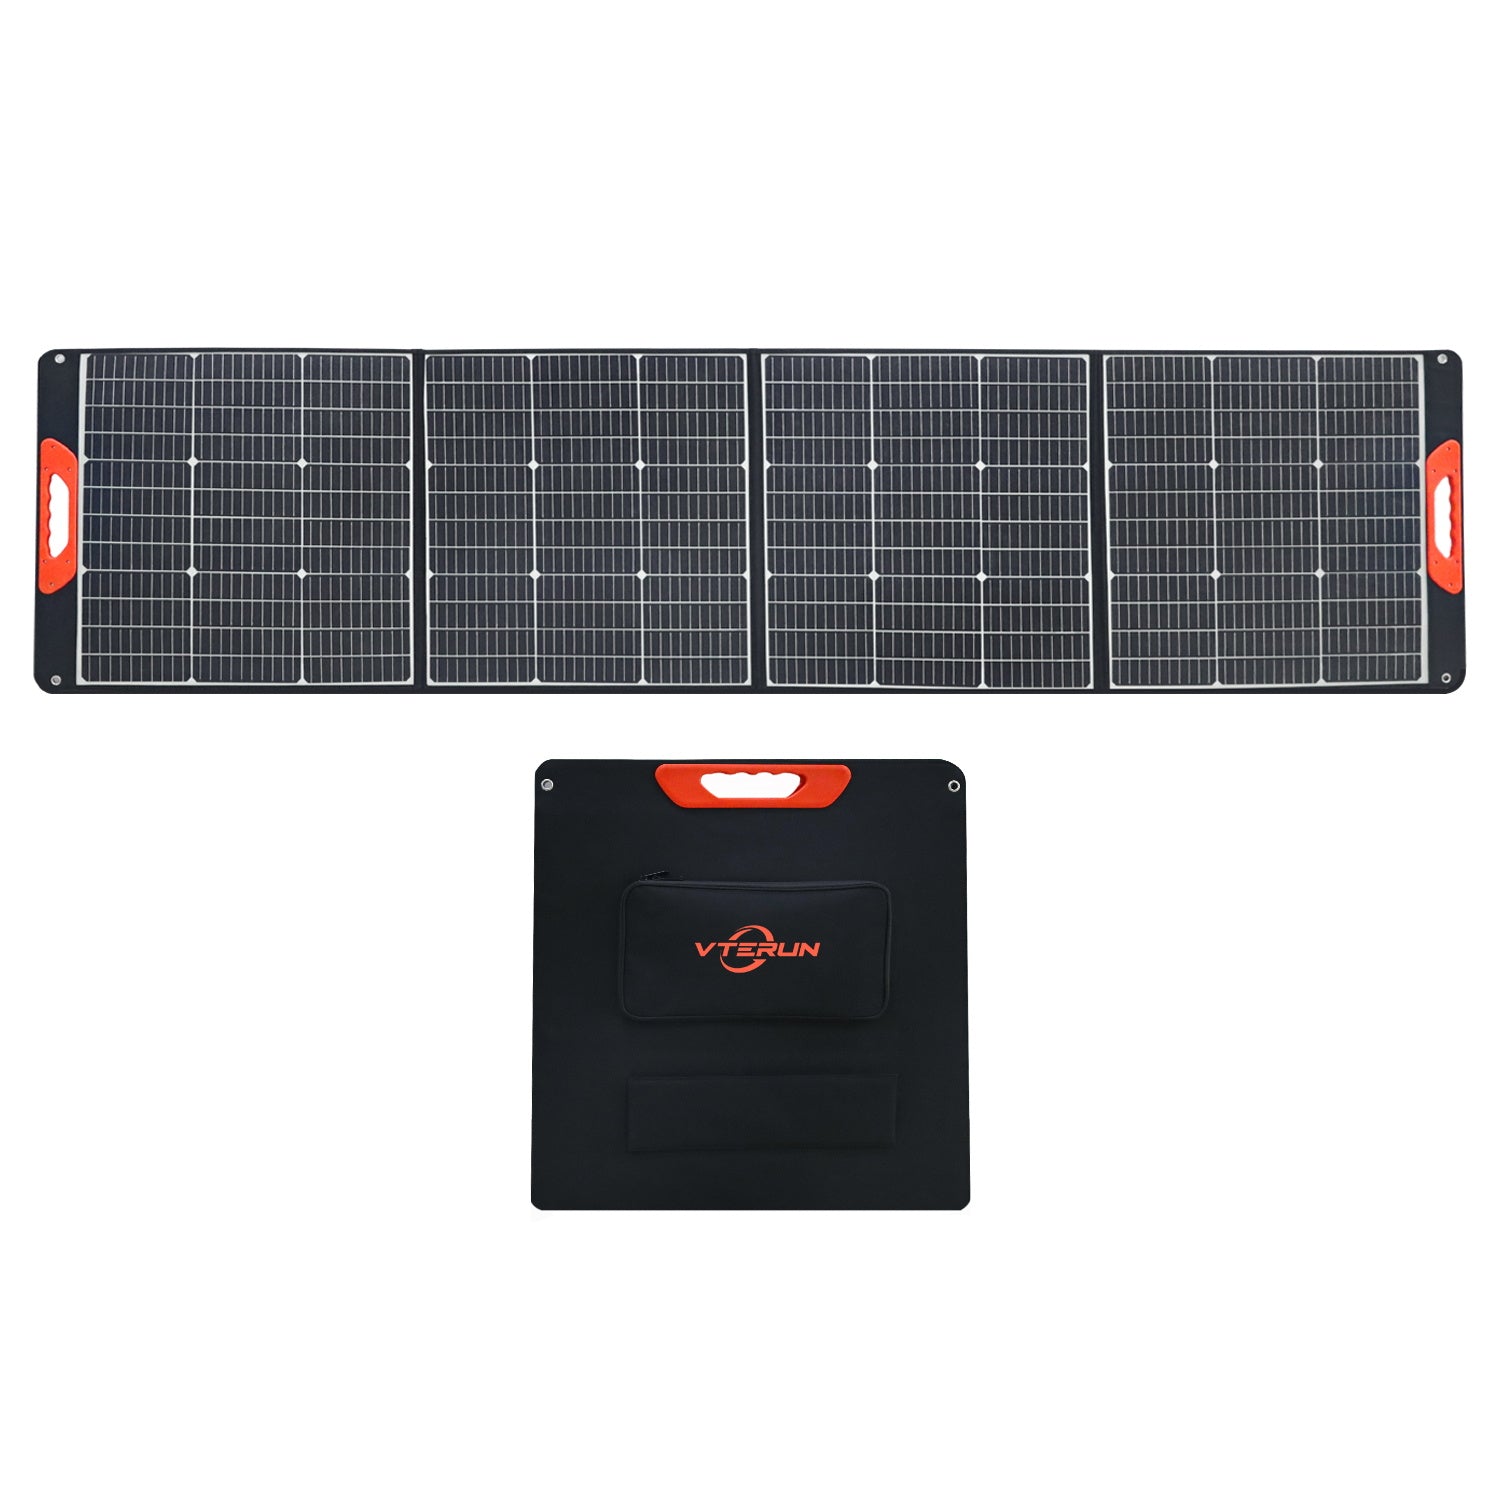 VTOMAN 220W Portable Solar Panel - ShopSolar.com